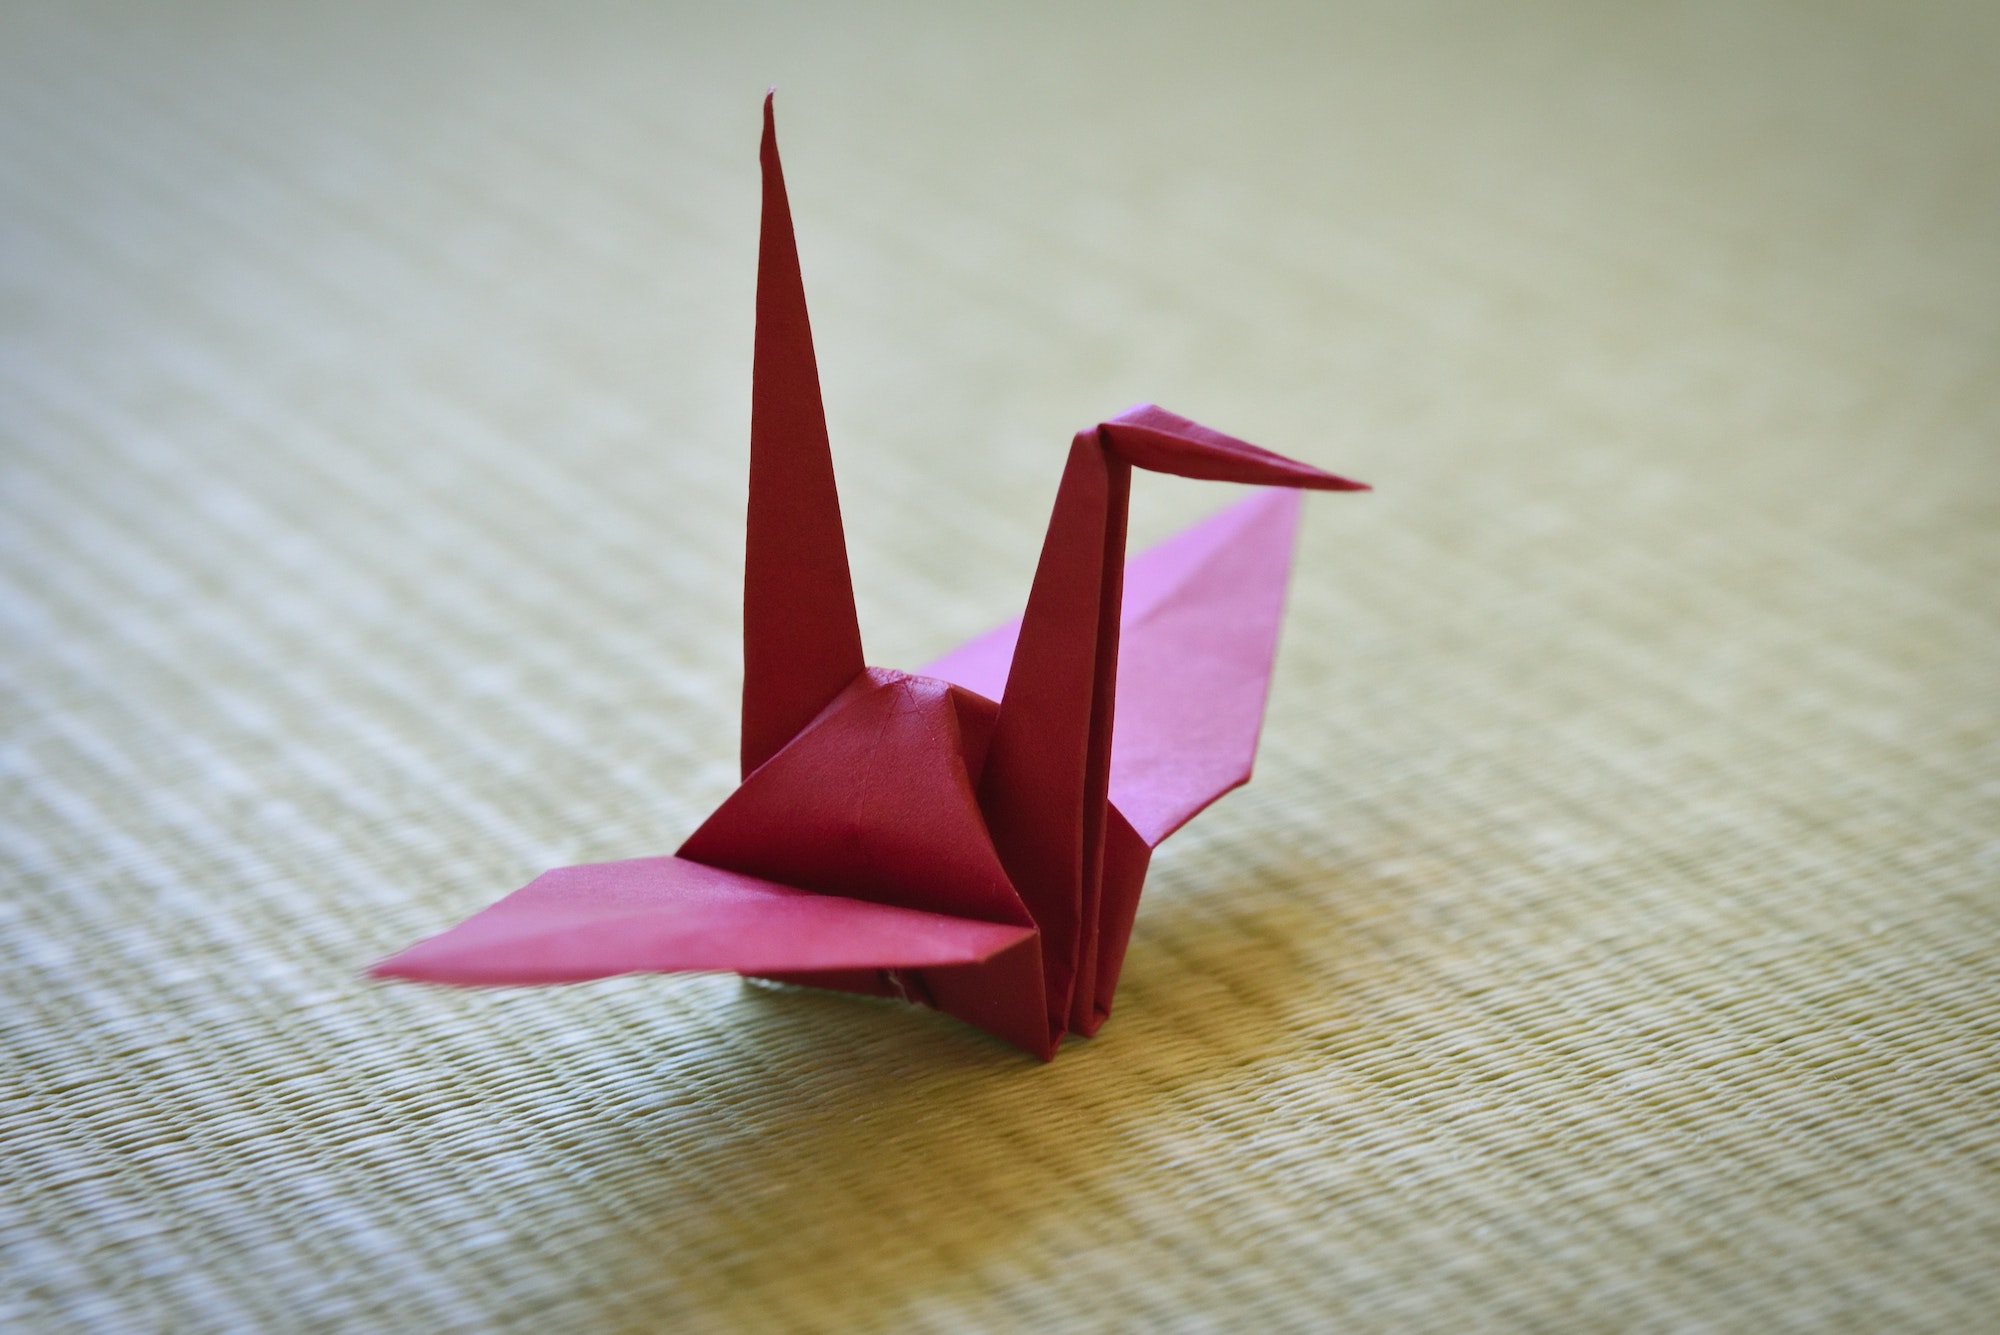 Paper crane on the tatami mat